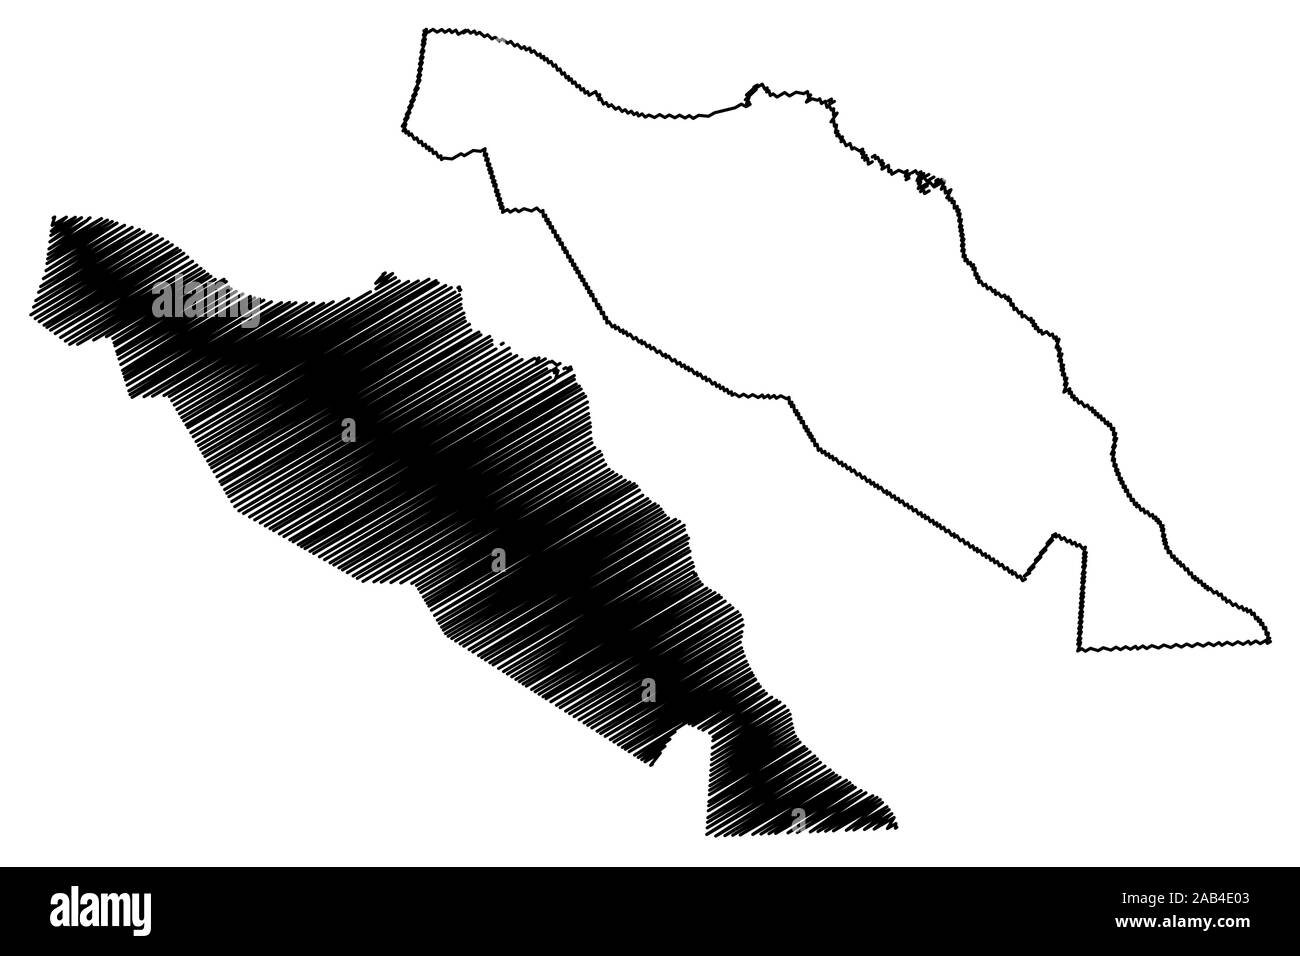 Muscat Governatorats (Sultanat Oman, Gouvernements von Oman) Karte Vektor-illustration, kritzeln Skizze, Muscat Karte anzeigen Stock Vektor